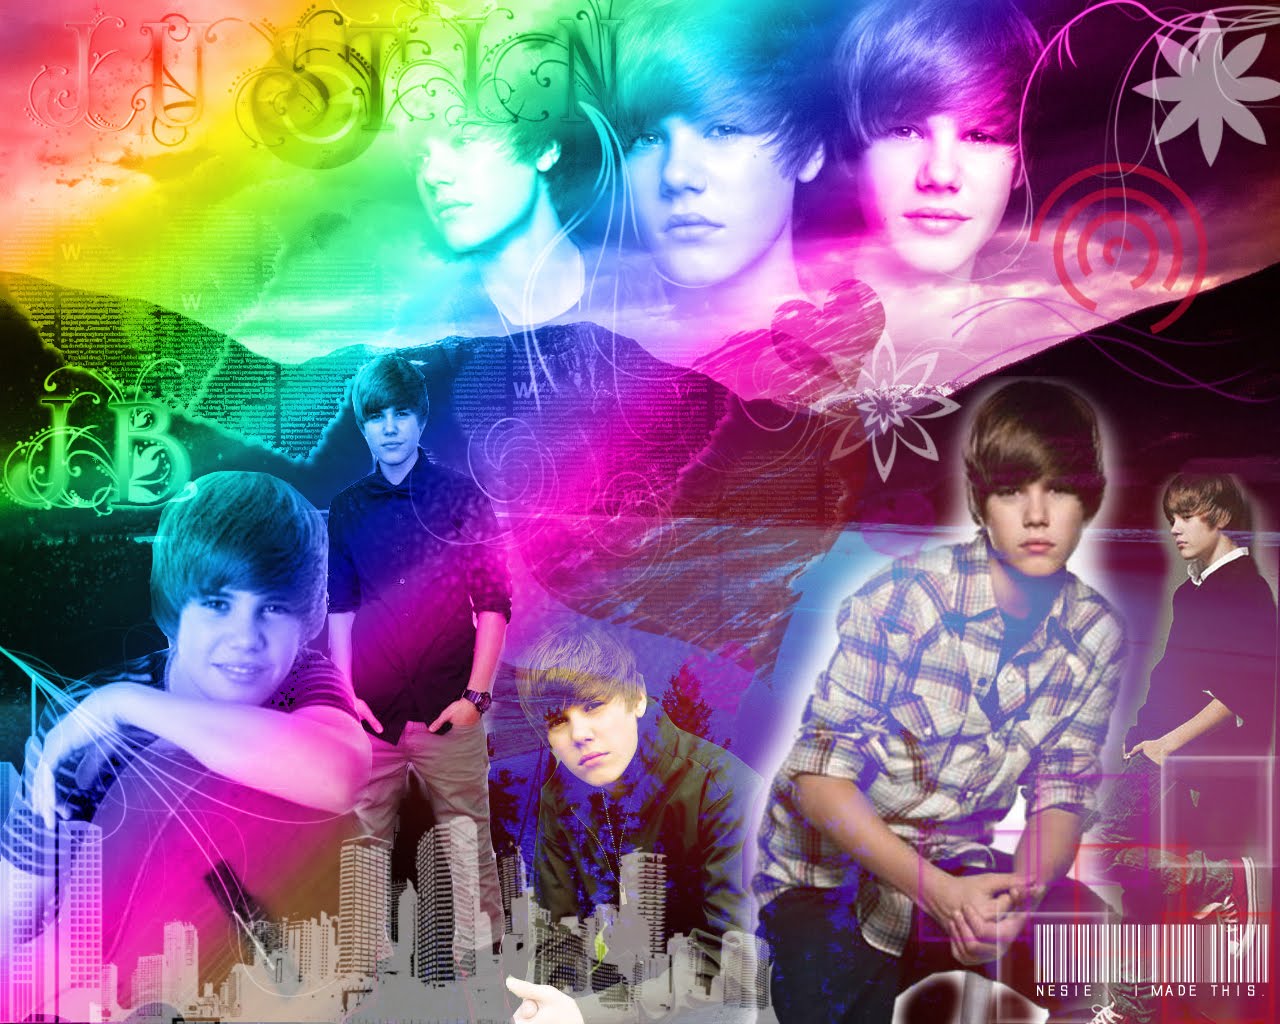 Wallpaper Of Justim Bieber